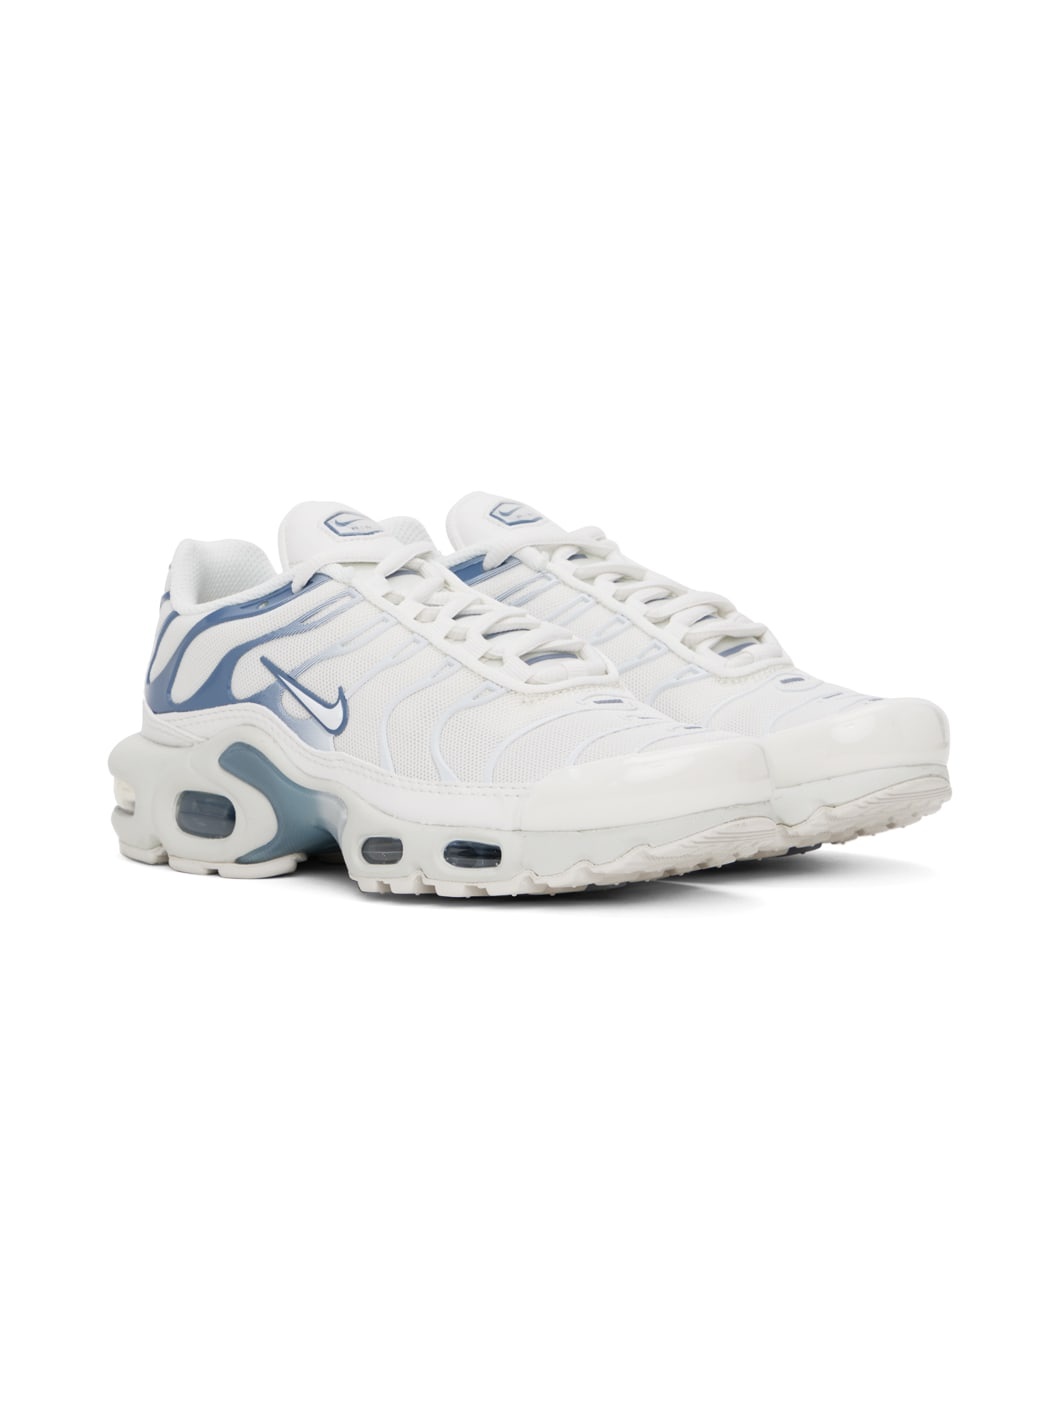 White & Blue Air Max Plus Sneakers - 4